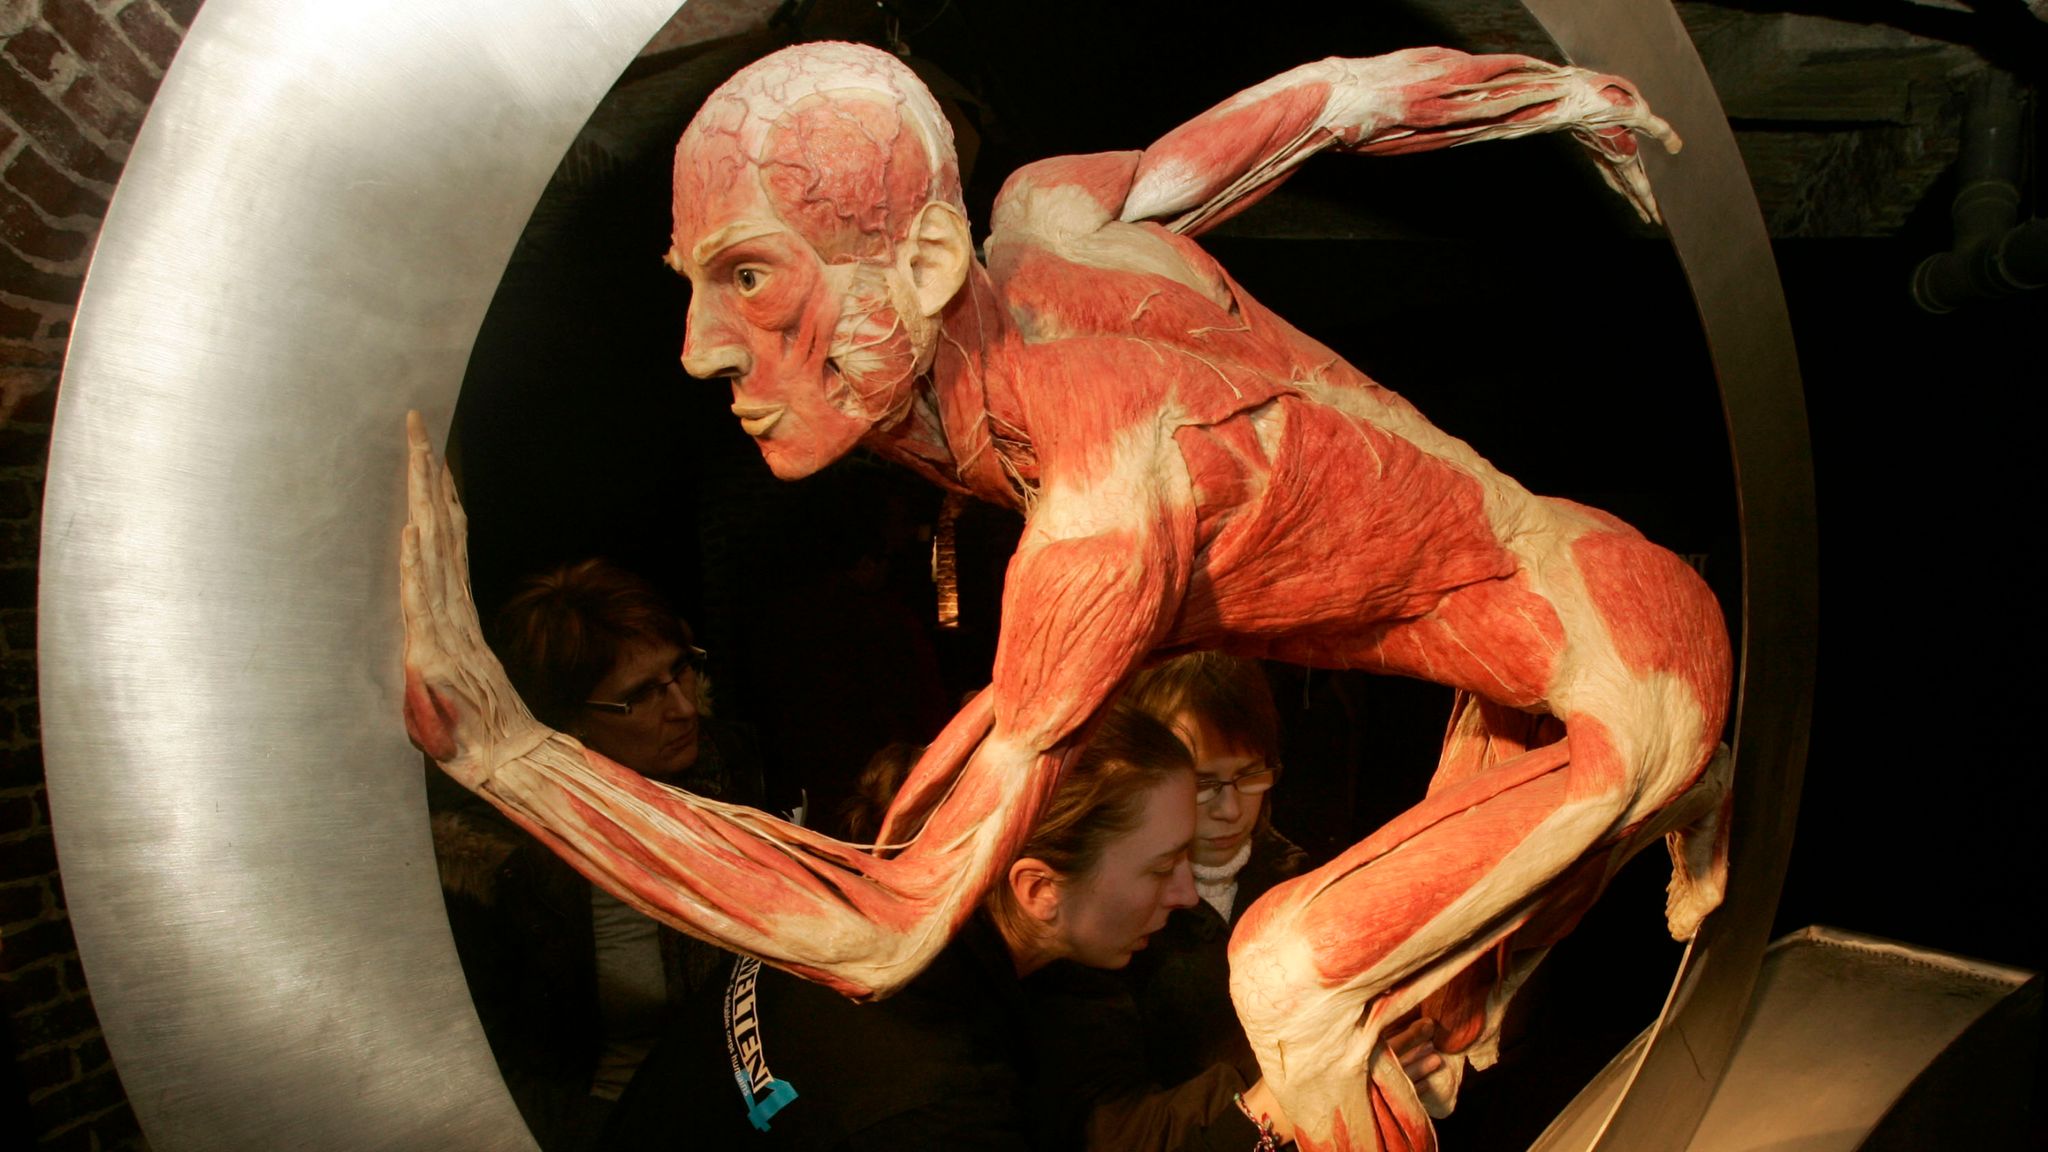 human body art exhibit